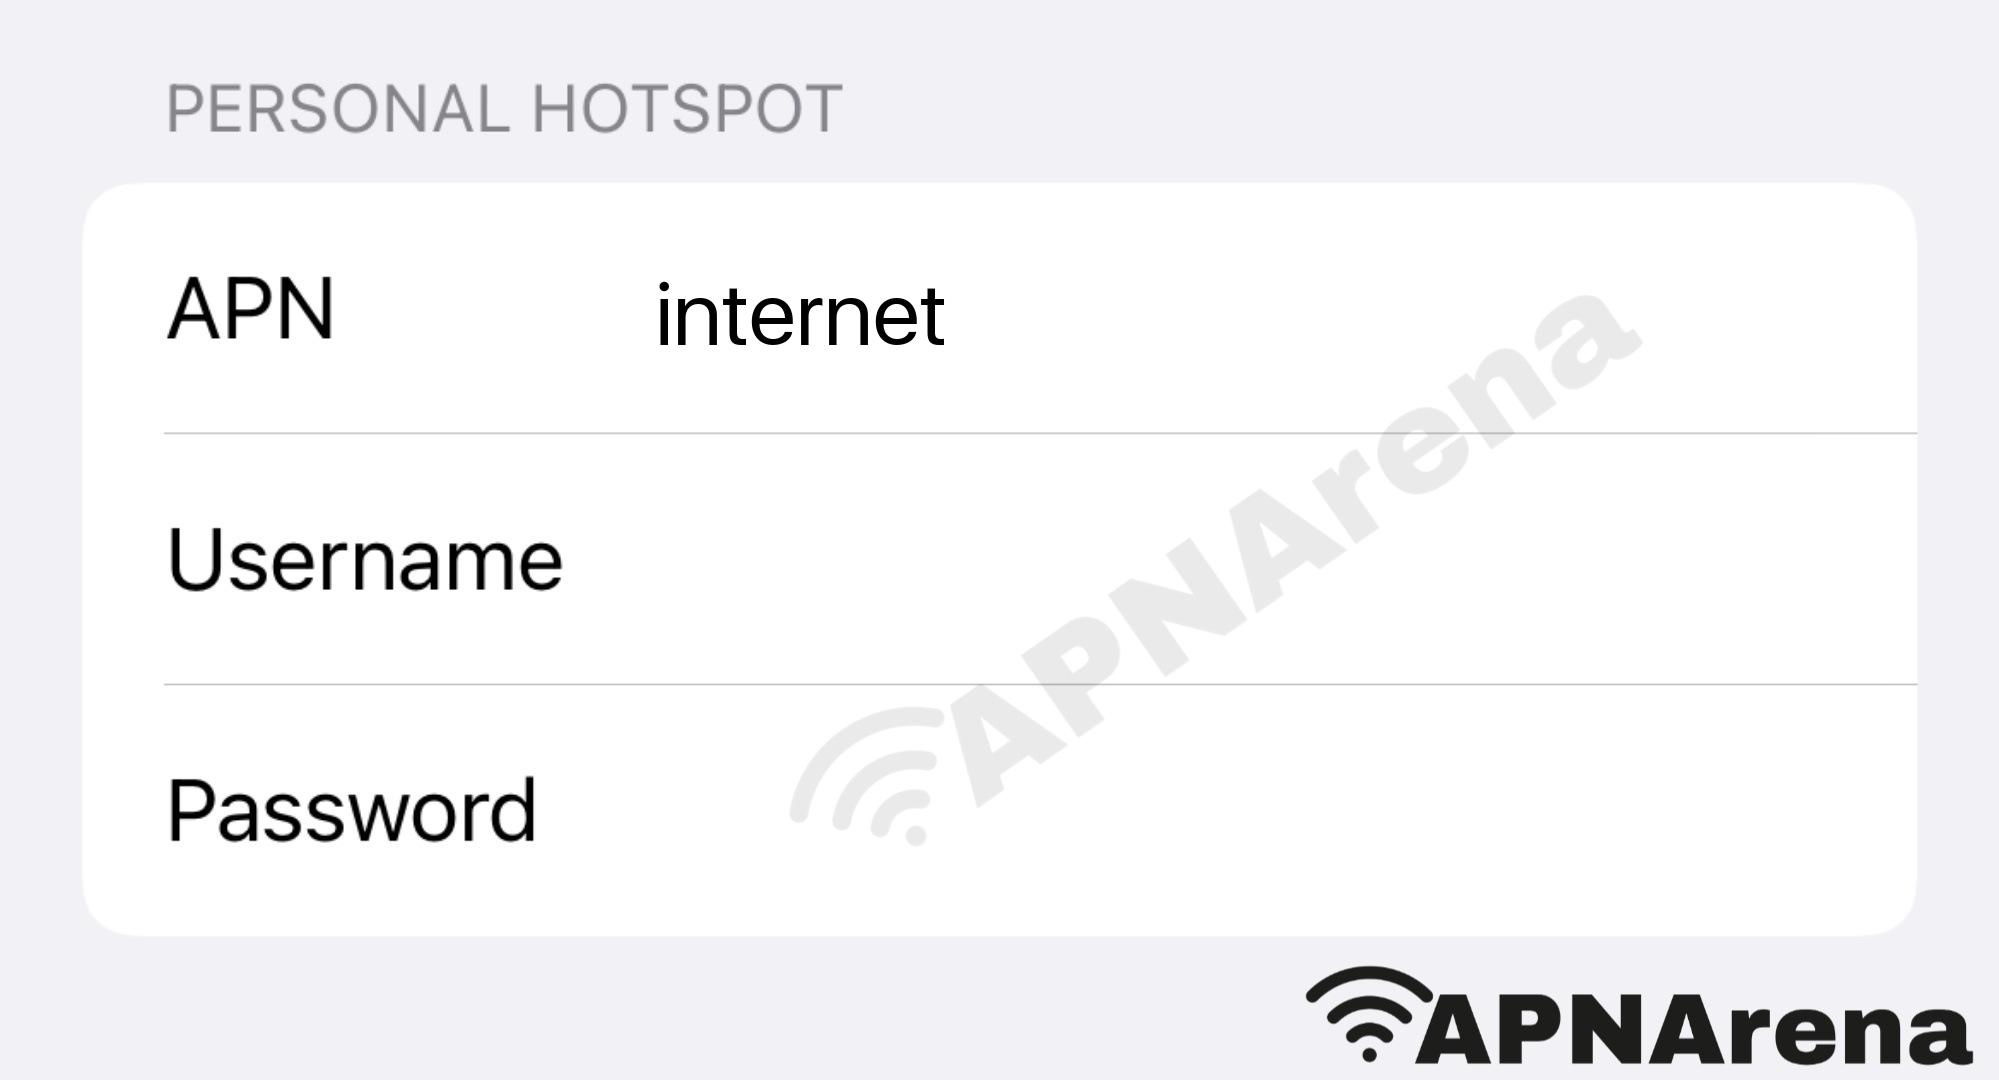 Viaero Wireless Personal Hotspot Settings for iPhone